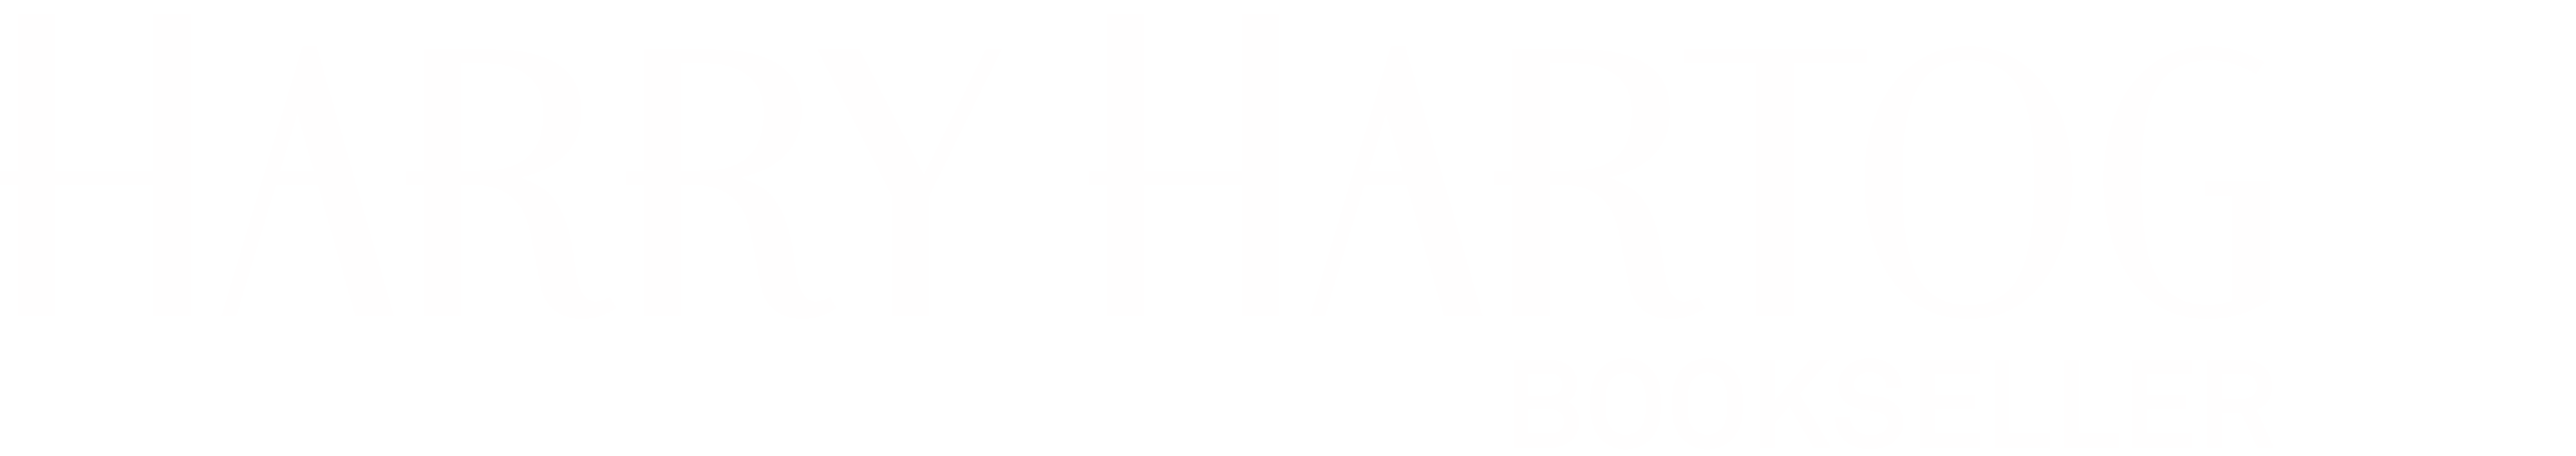 Bookseller Logo - Harry Hartog Booksellers